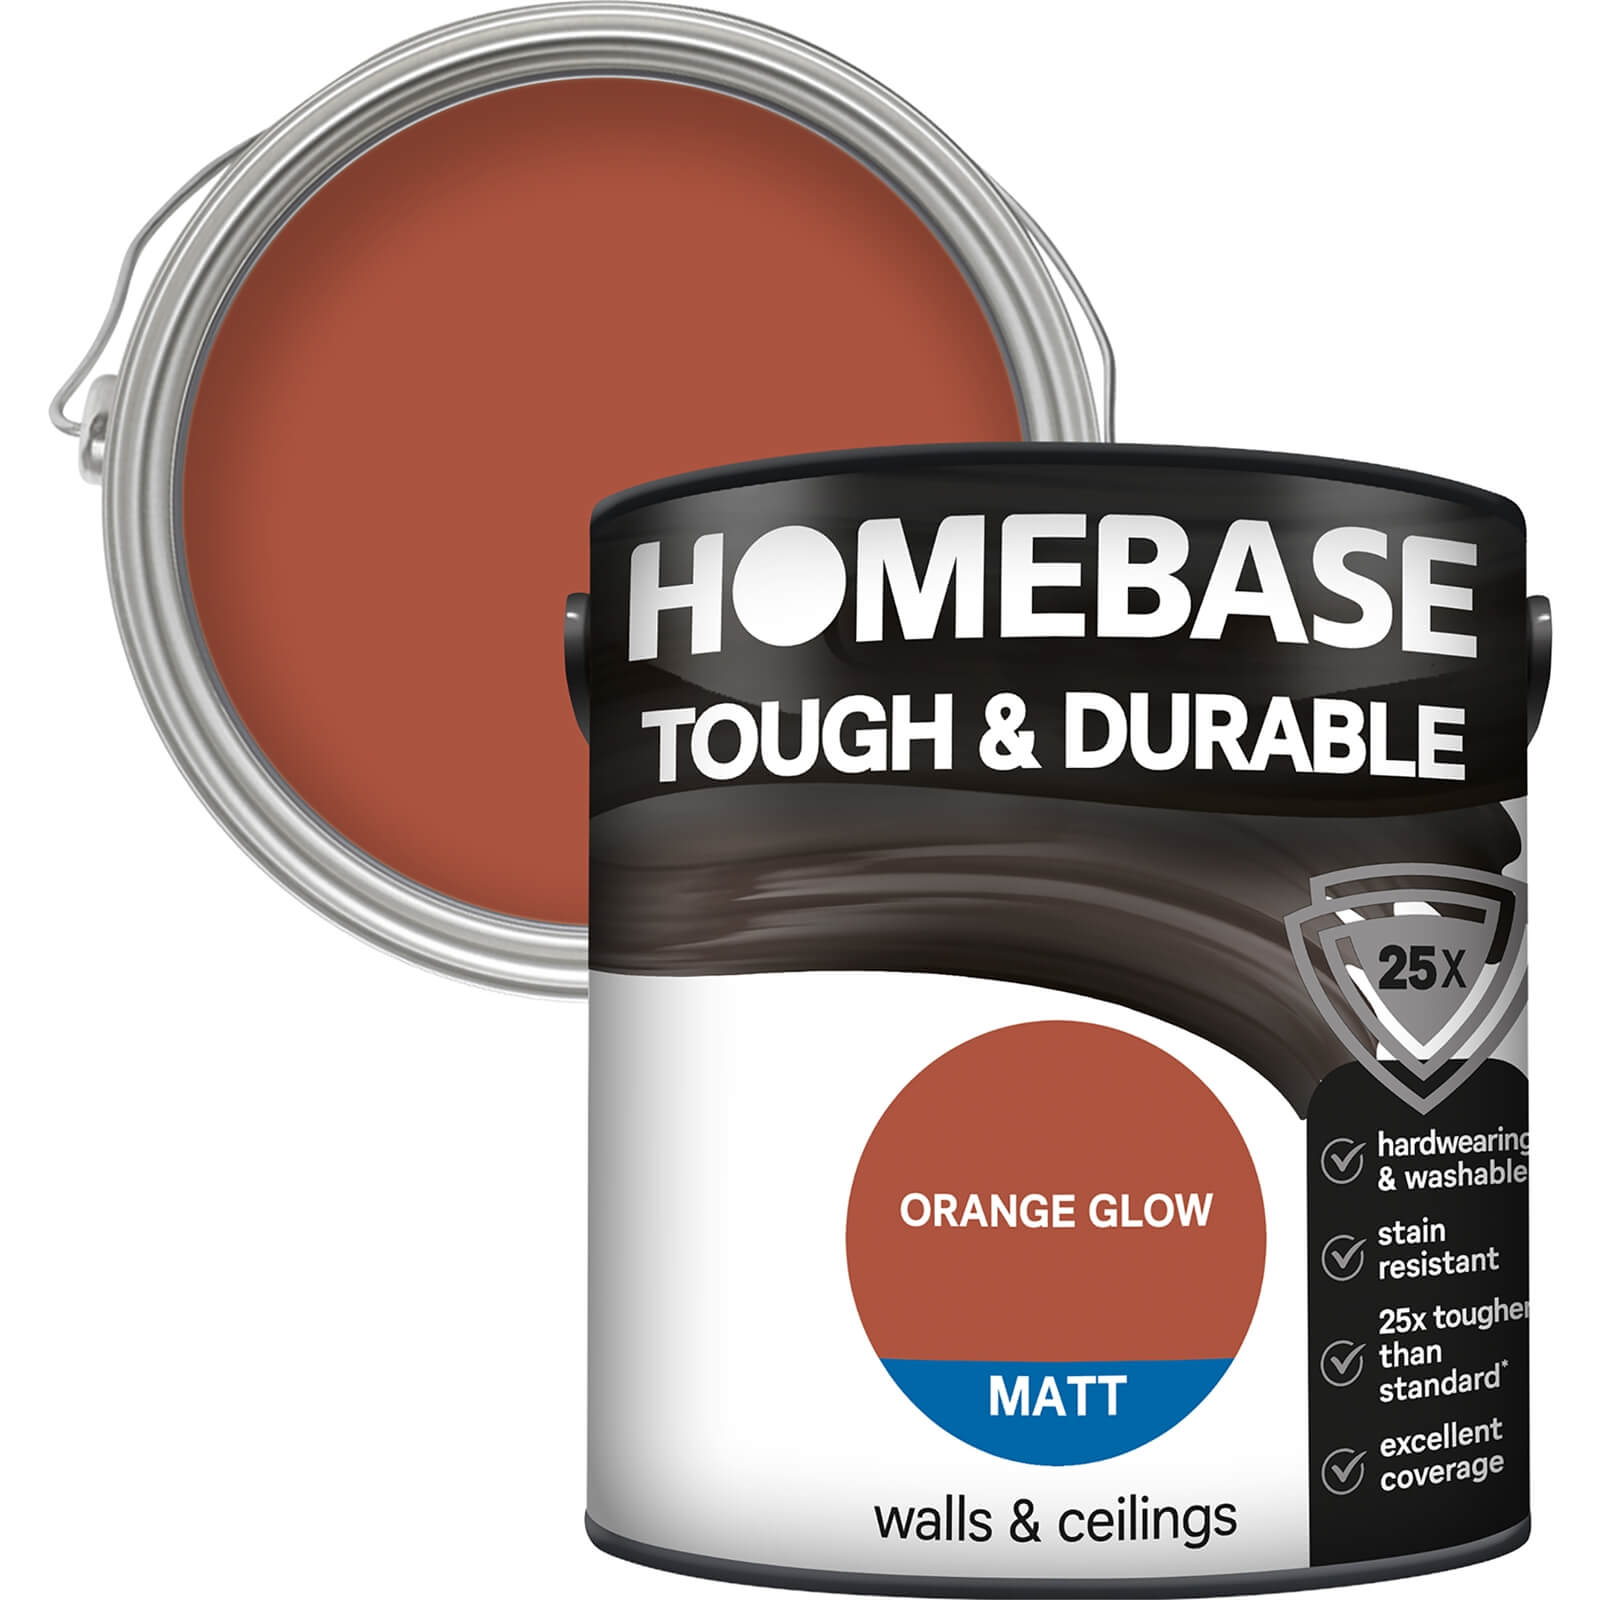 Homebase Tough & Durable Matt Paint Orange Glow - 2.5L